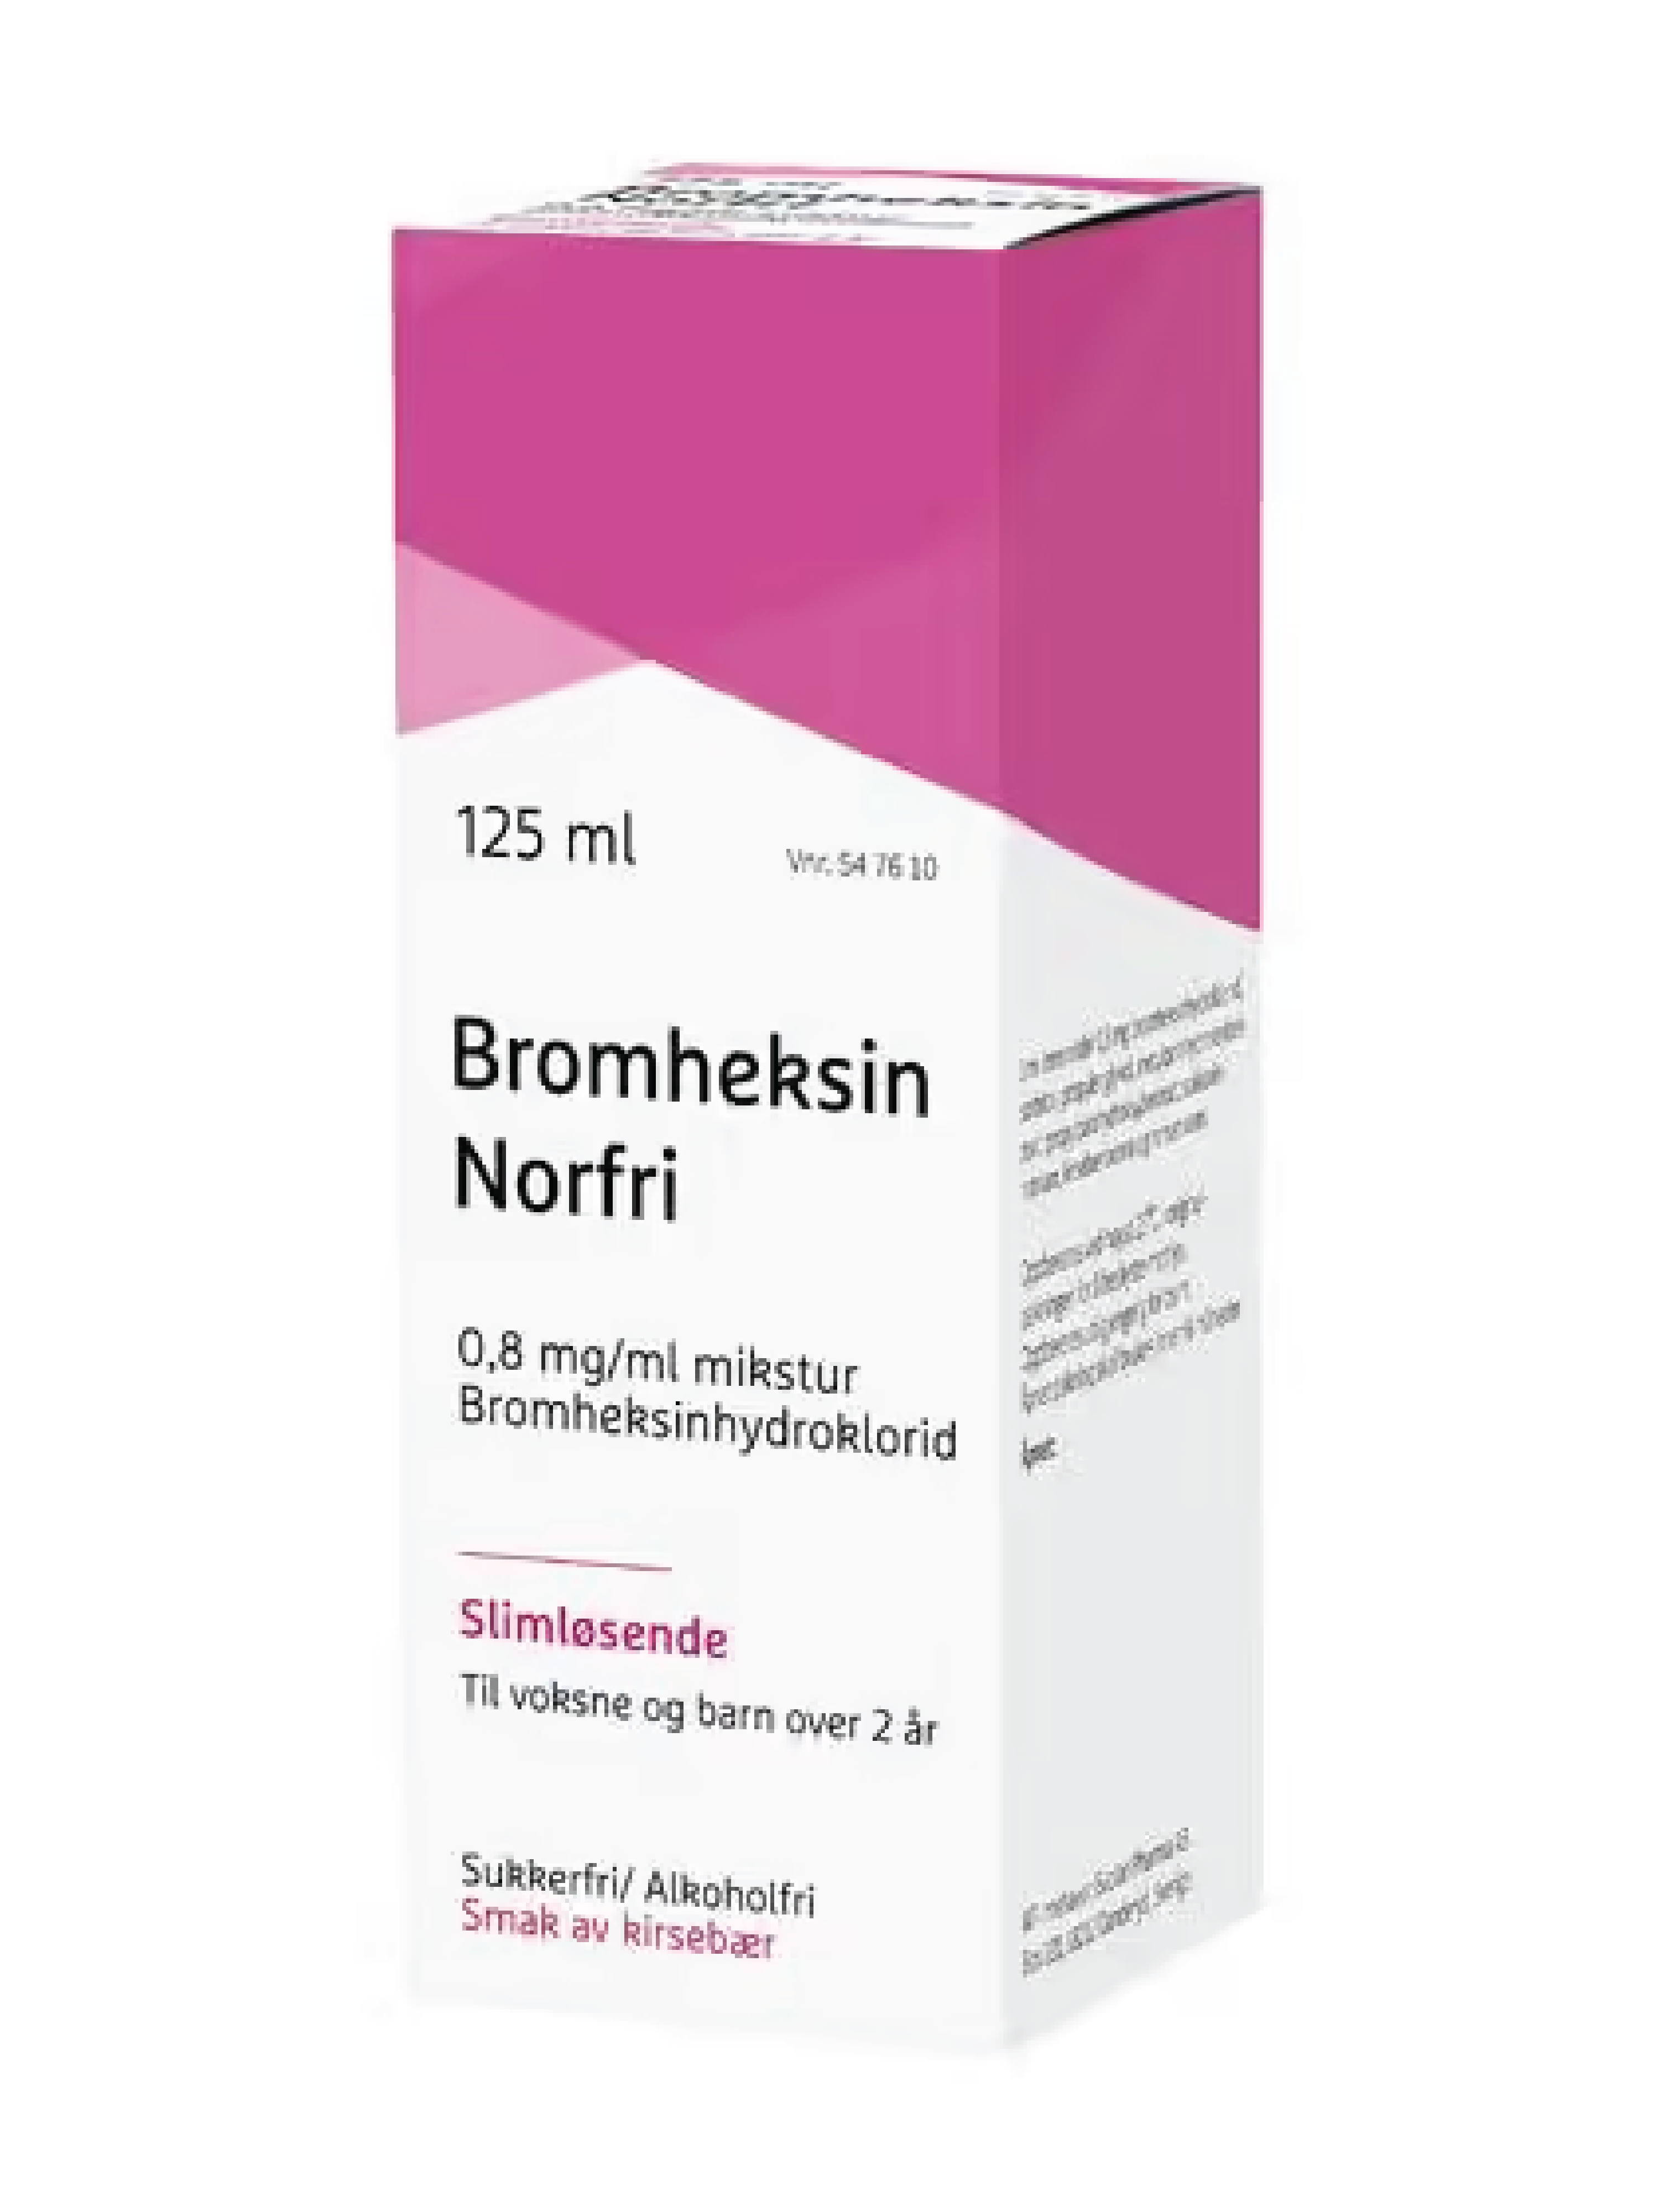 Bromheksin Norfri 0,8 mg/ml mikstur, Kirsebær, 125 ml